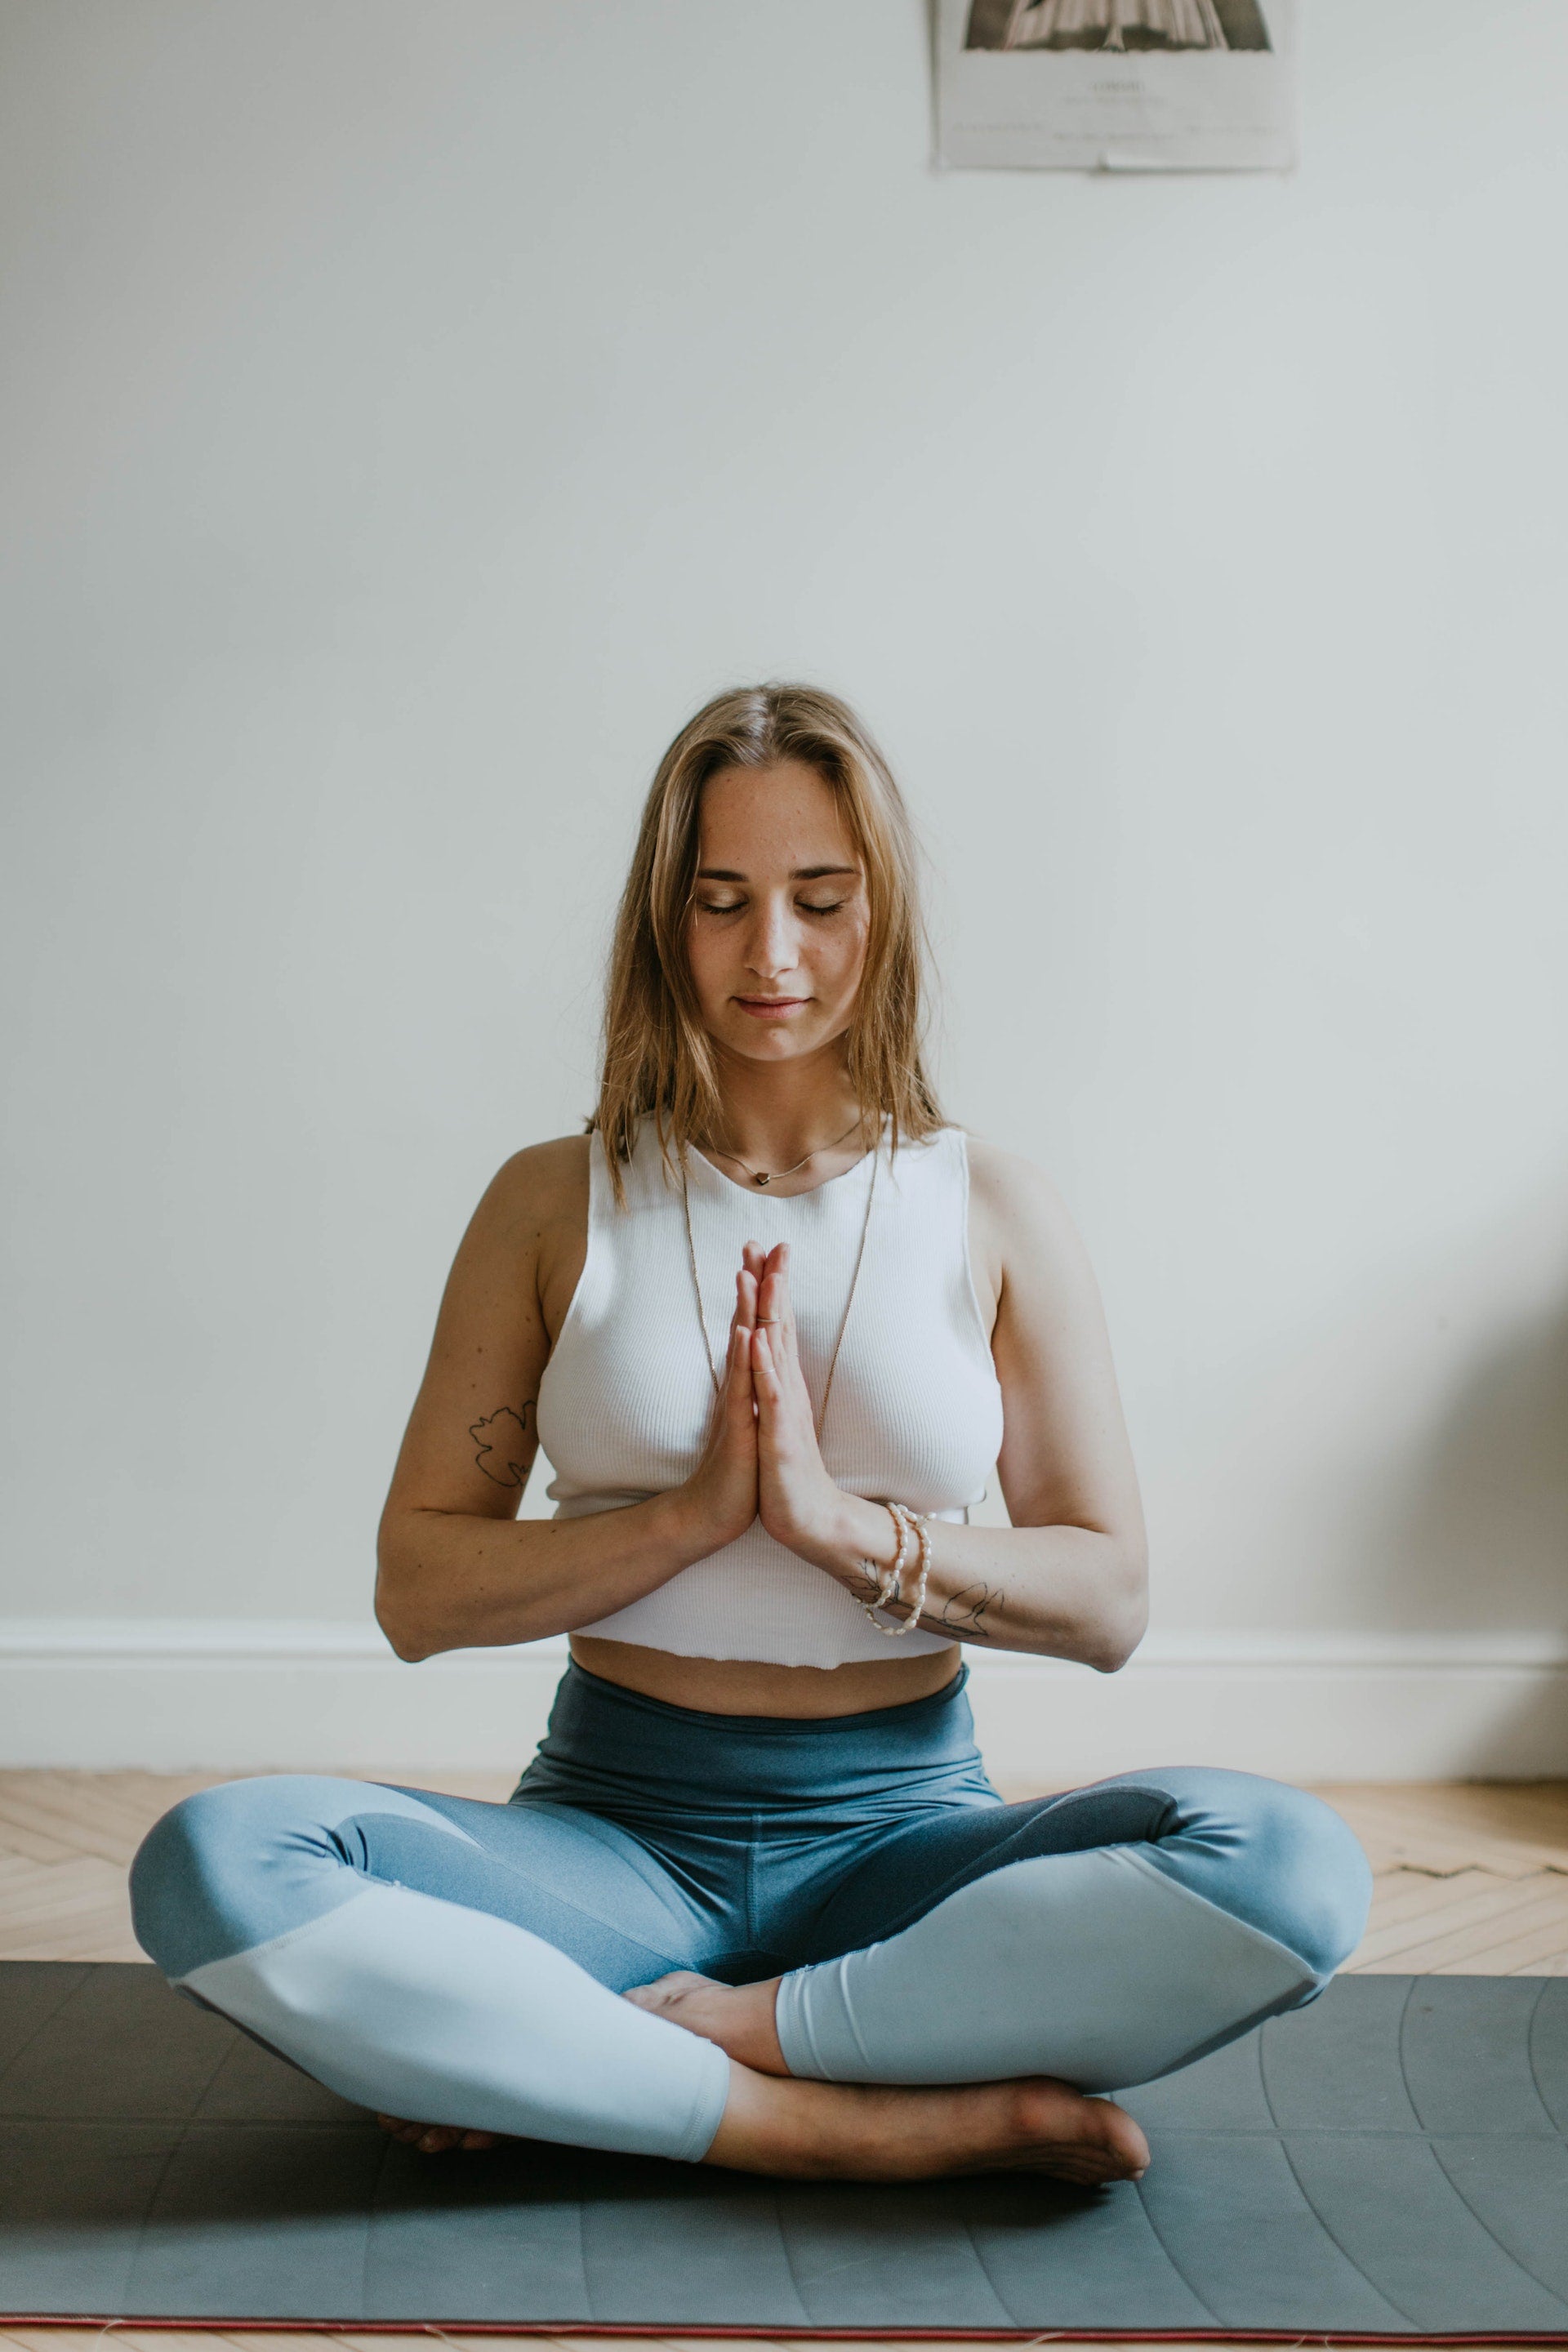 matcha for meditation: woman meditating